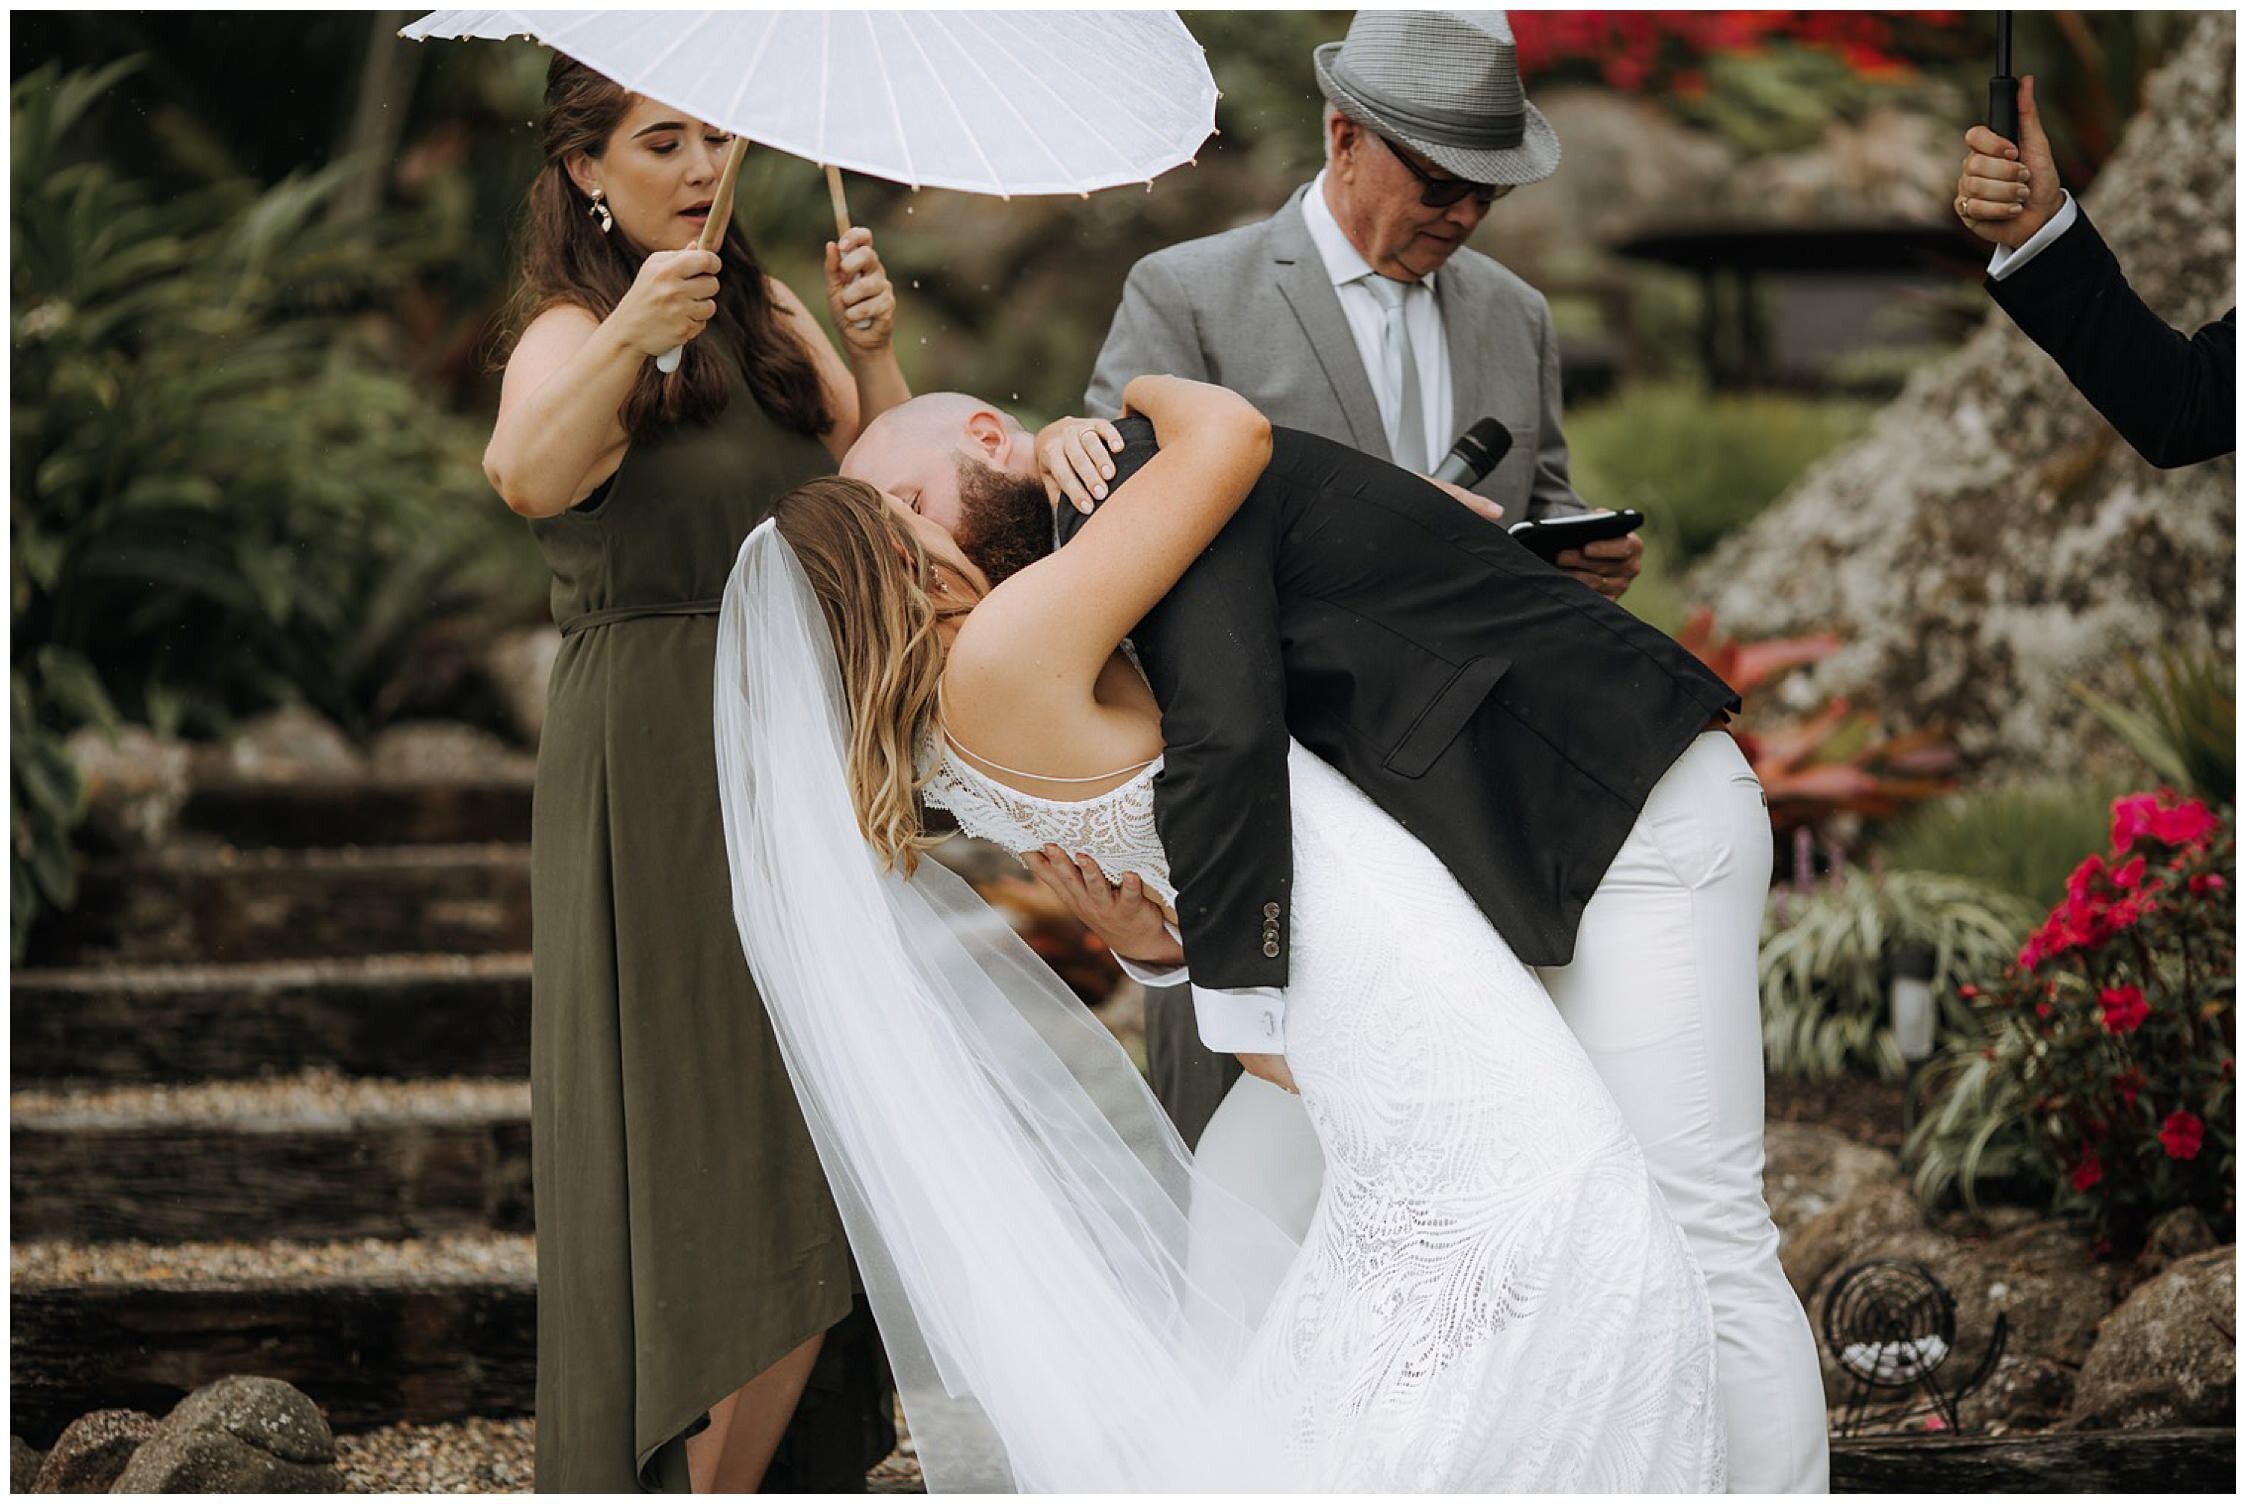 Zanda+Auckland+wedding+photographer+dramatic+Whangarei+heads+vintage+touches+New+Zealand_36.jpeg